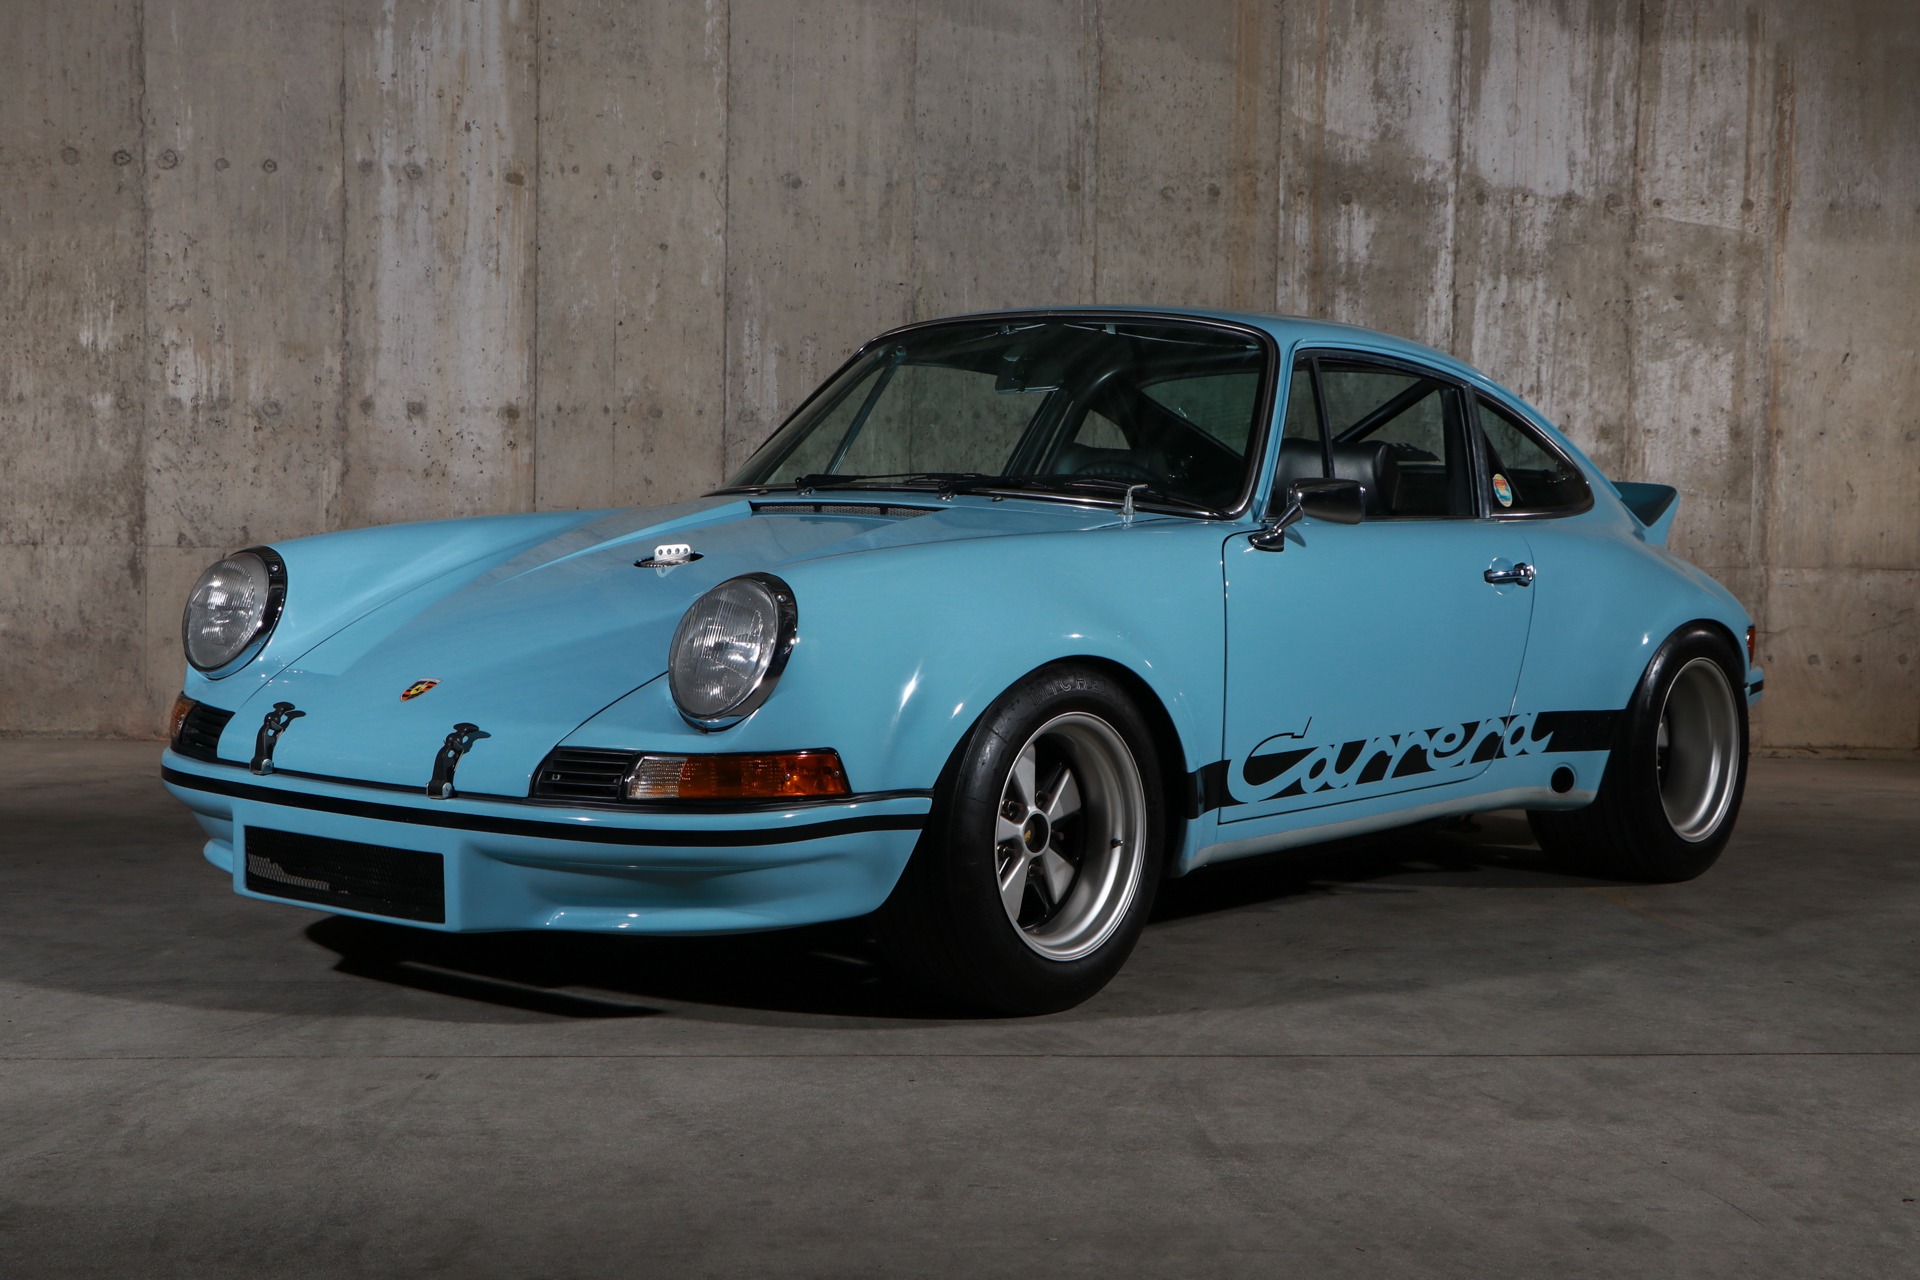 Used 1973 Porsche 911 RSR For Sale ($299,995) | Ryan Friedman Motor Cars  LLC Stock #922